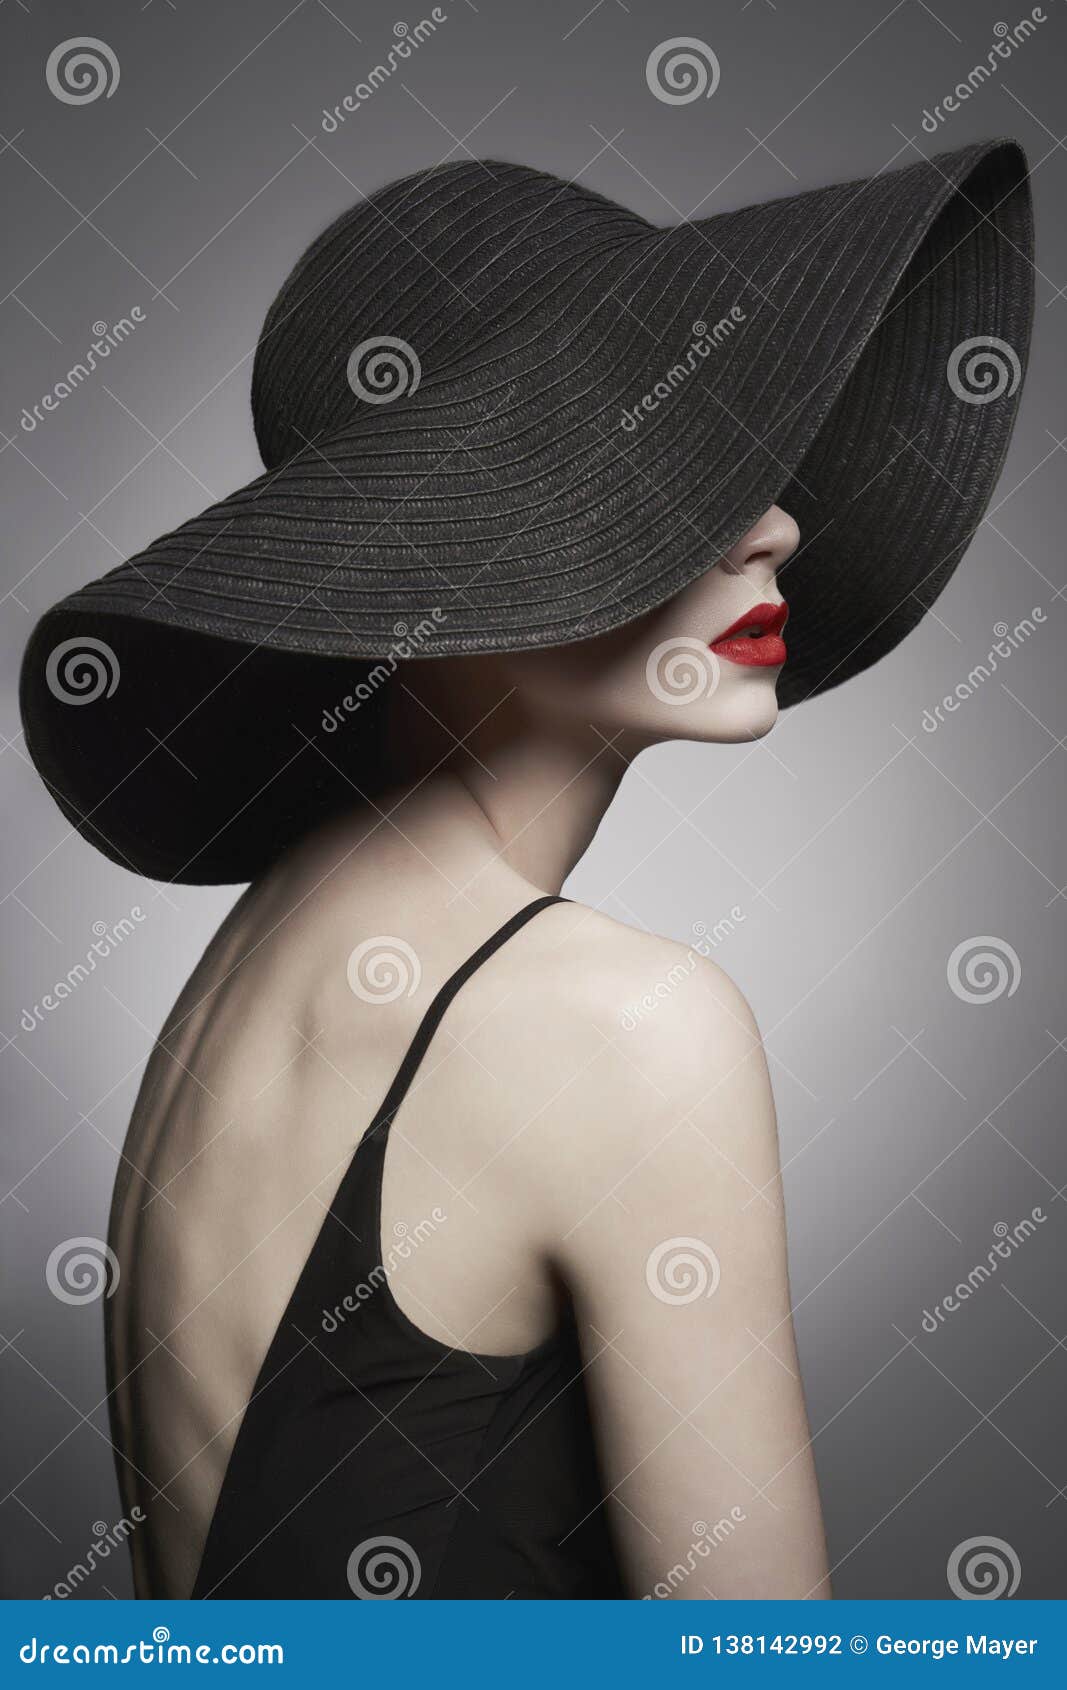 black dress with hat